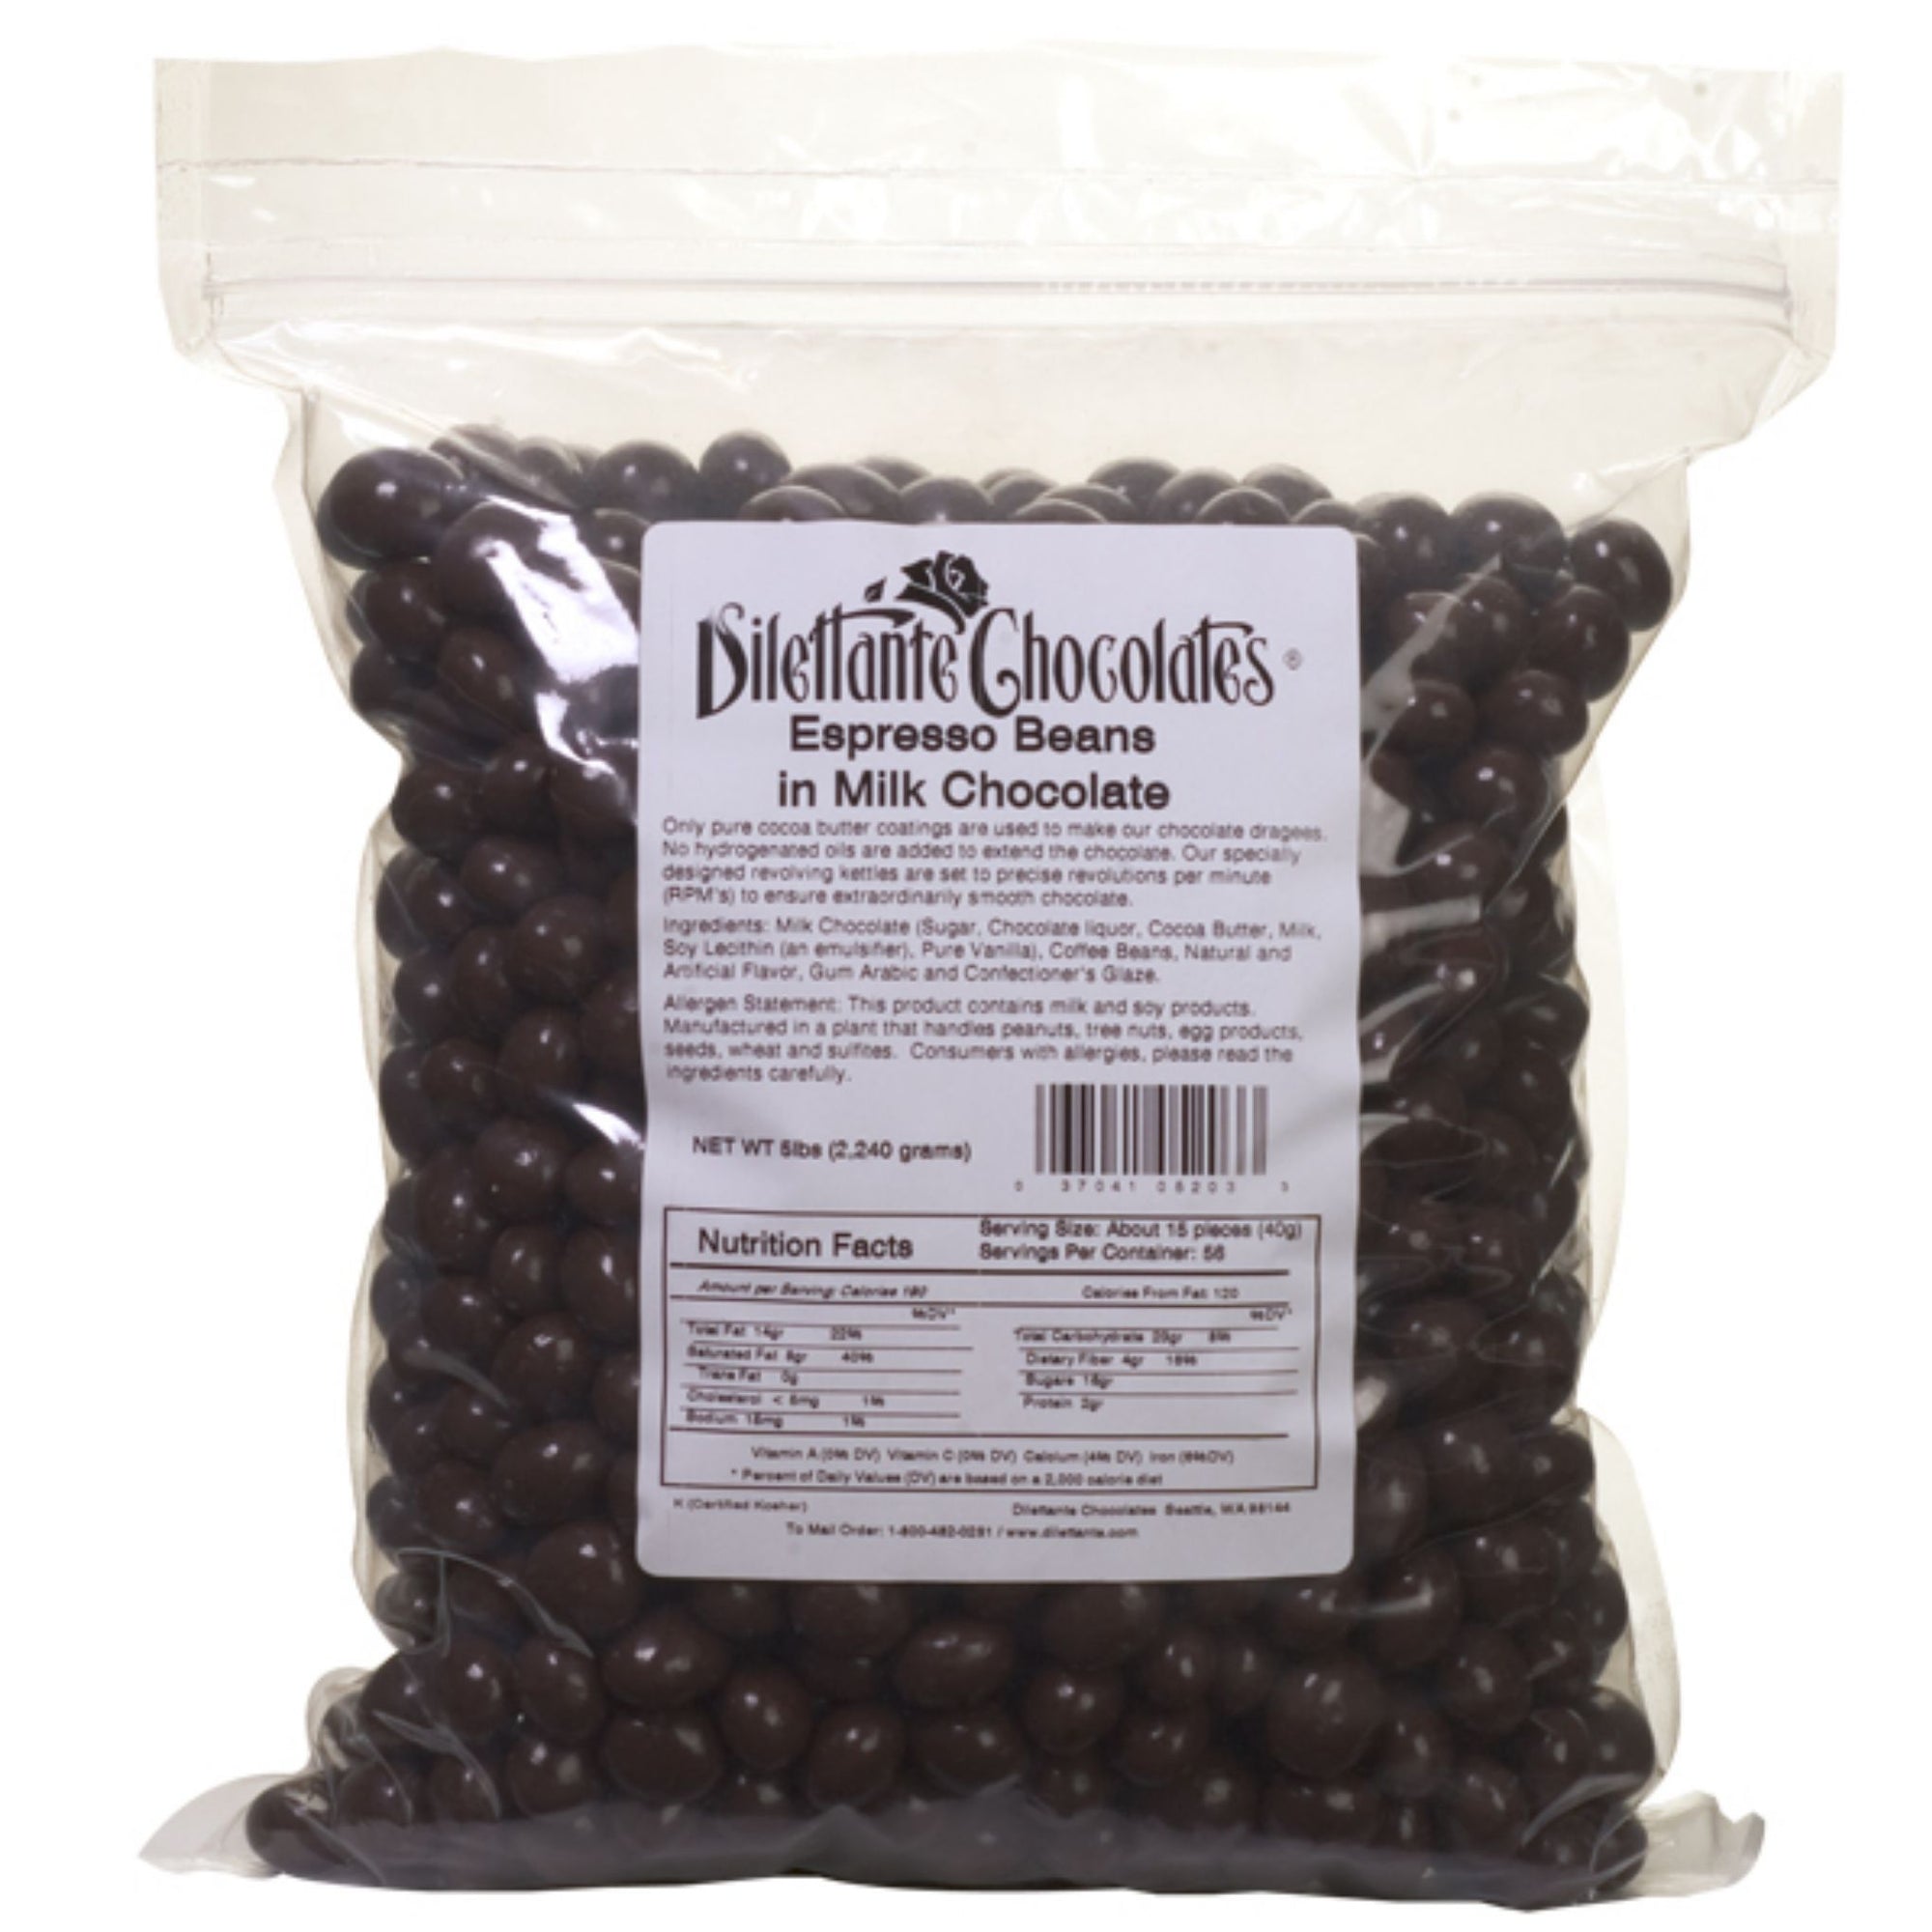 Dilettante Chocolates Espresso beans in Milk Chocolate in a Bulk 5-Pound Bag